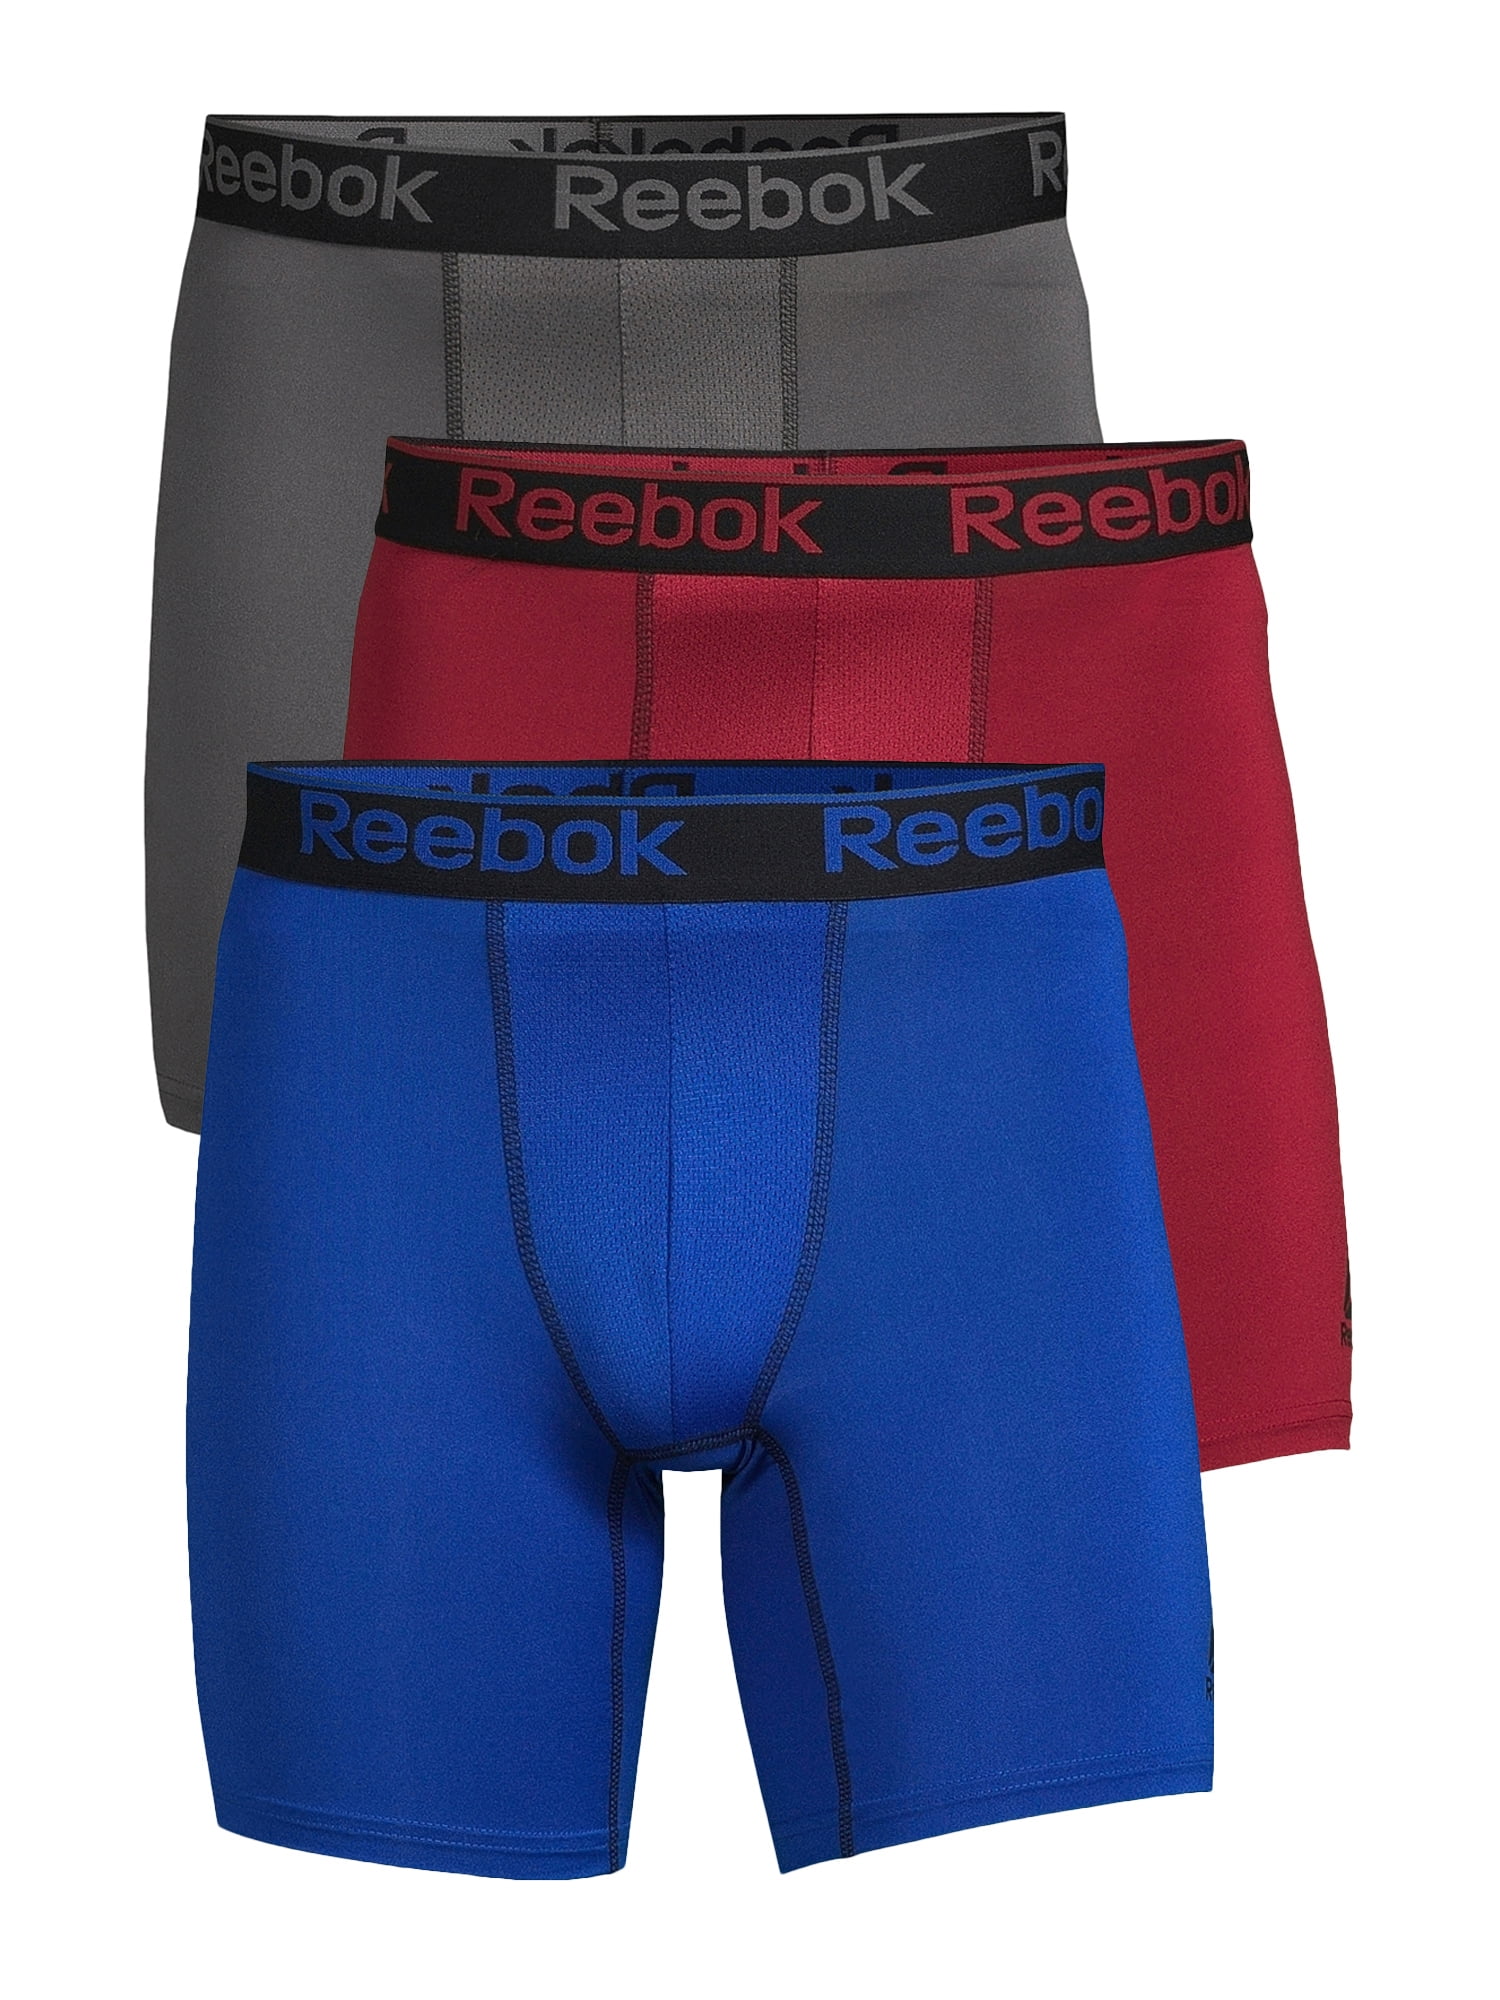 Reebok Men's Pro Series Performance Long Leg Boxer Brief, 3 Pack